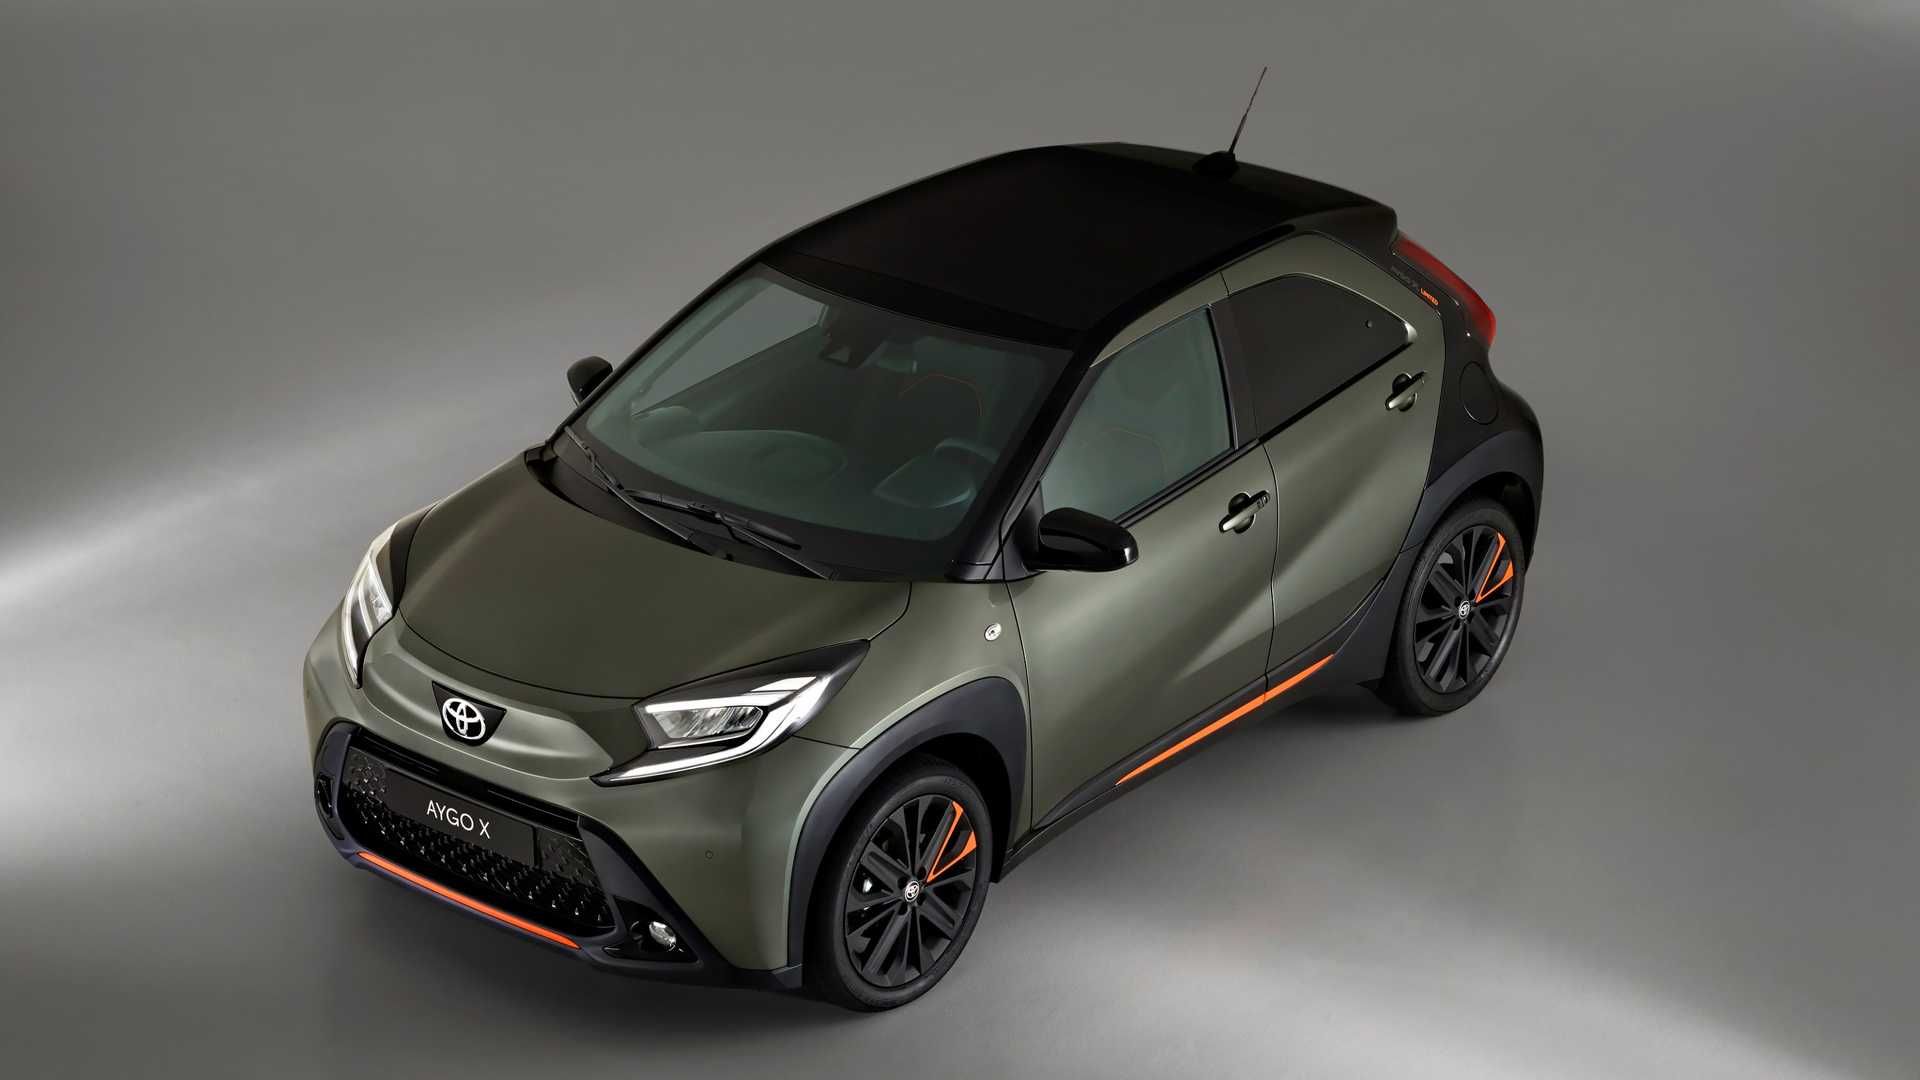 Toyota配備 最完整 的跨界小車亮相 Aygo X預告22年正式開賣 Ettoday車雲 Ettoday新聞雲